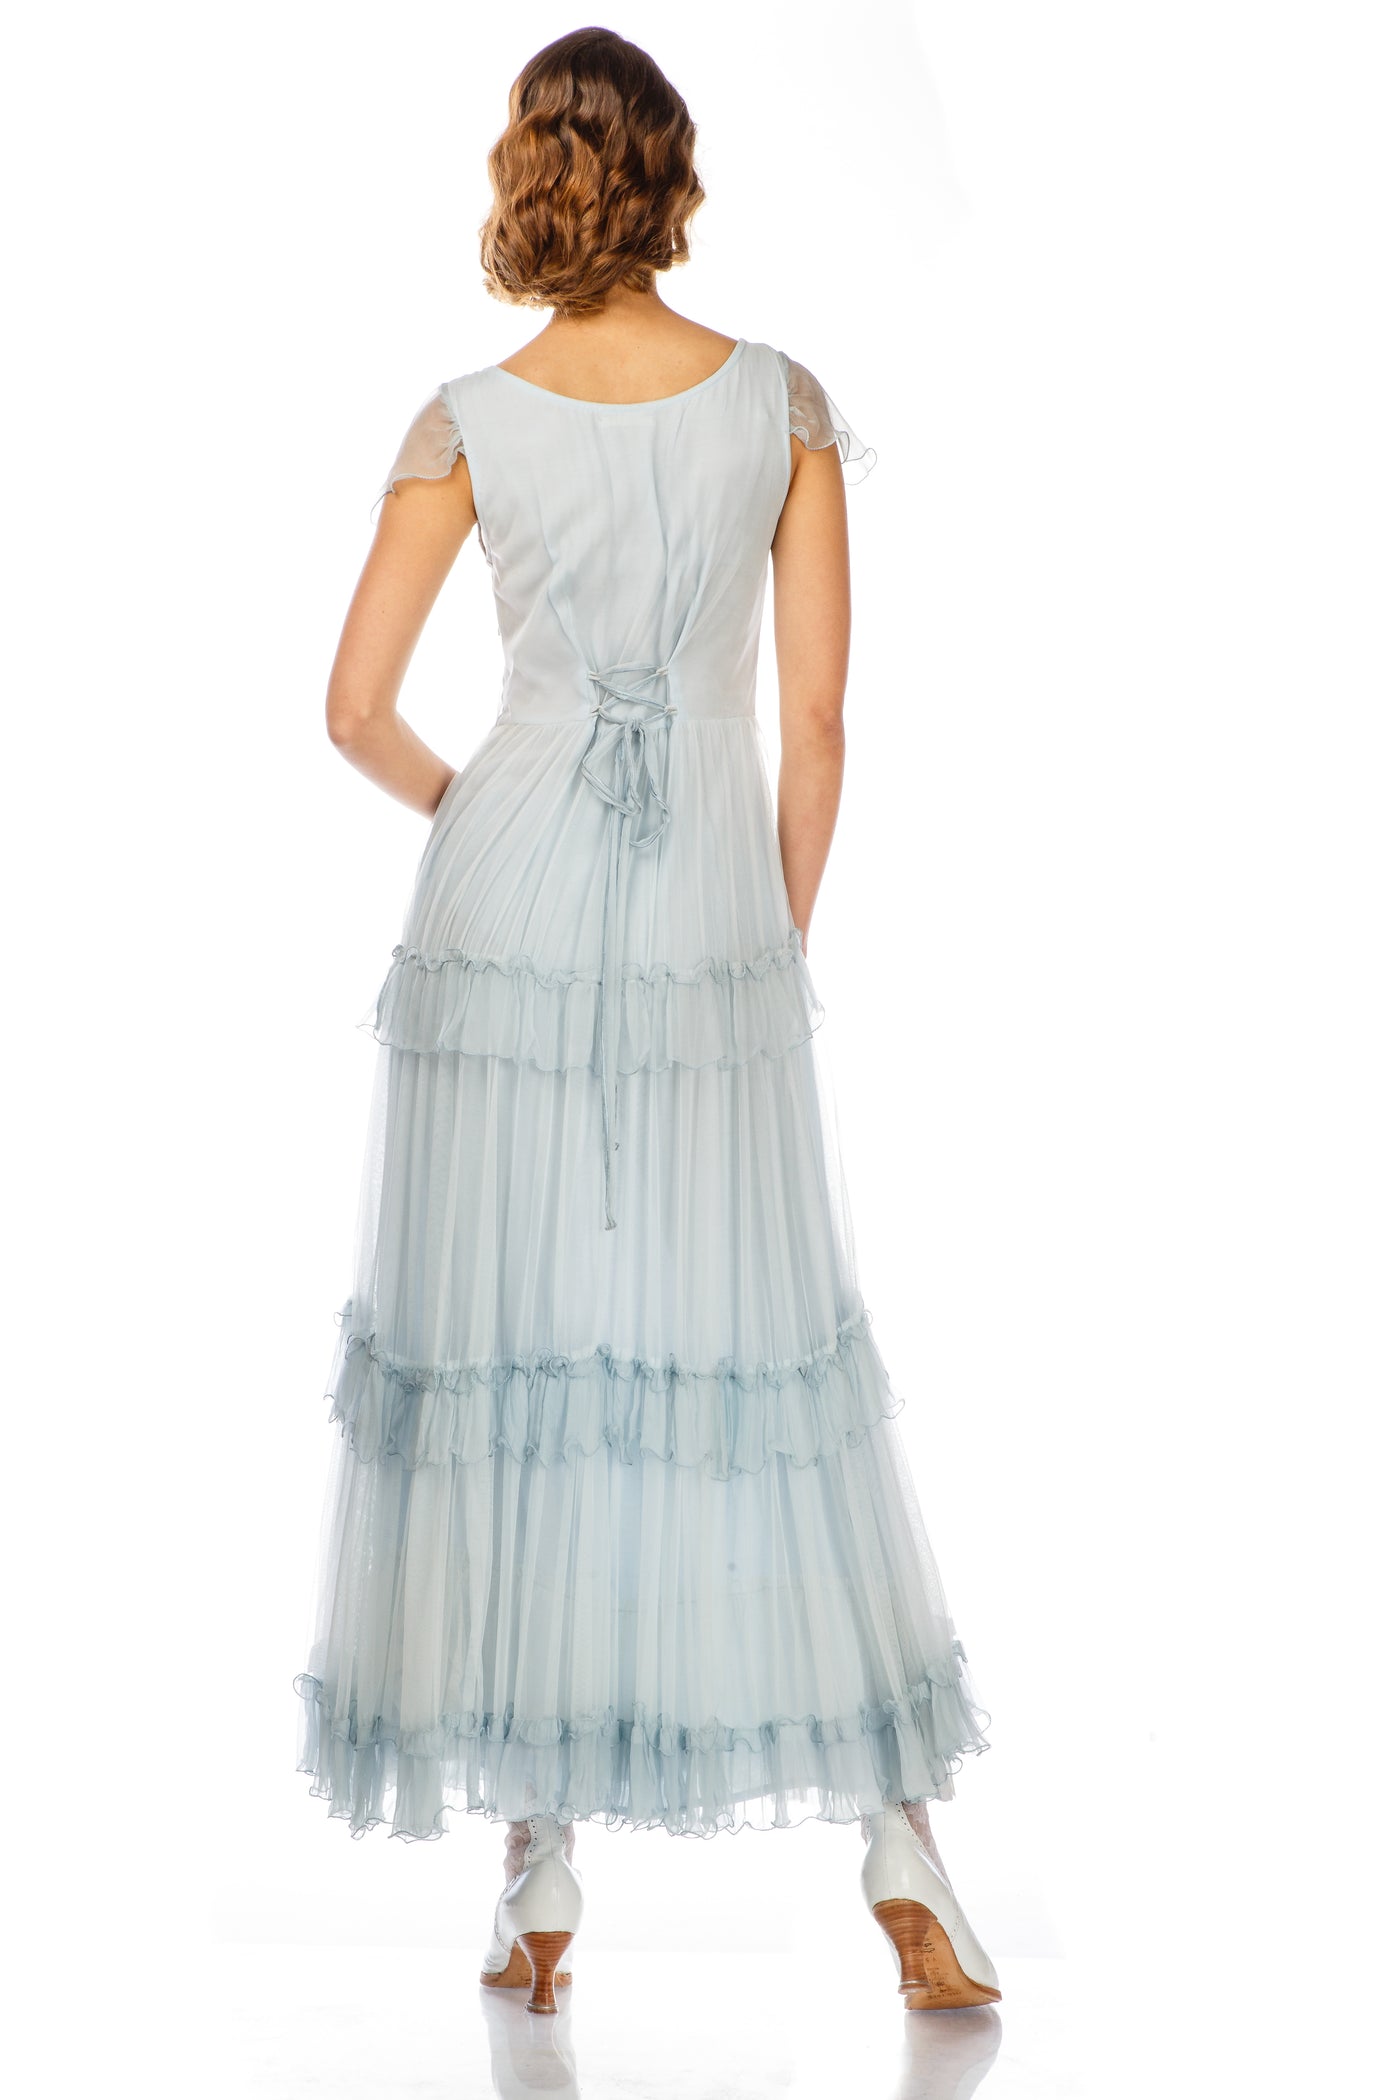 Harper Vintage Inspired Wedding Dress in Blue by Nataya